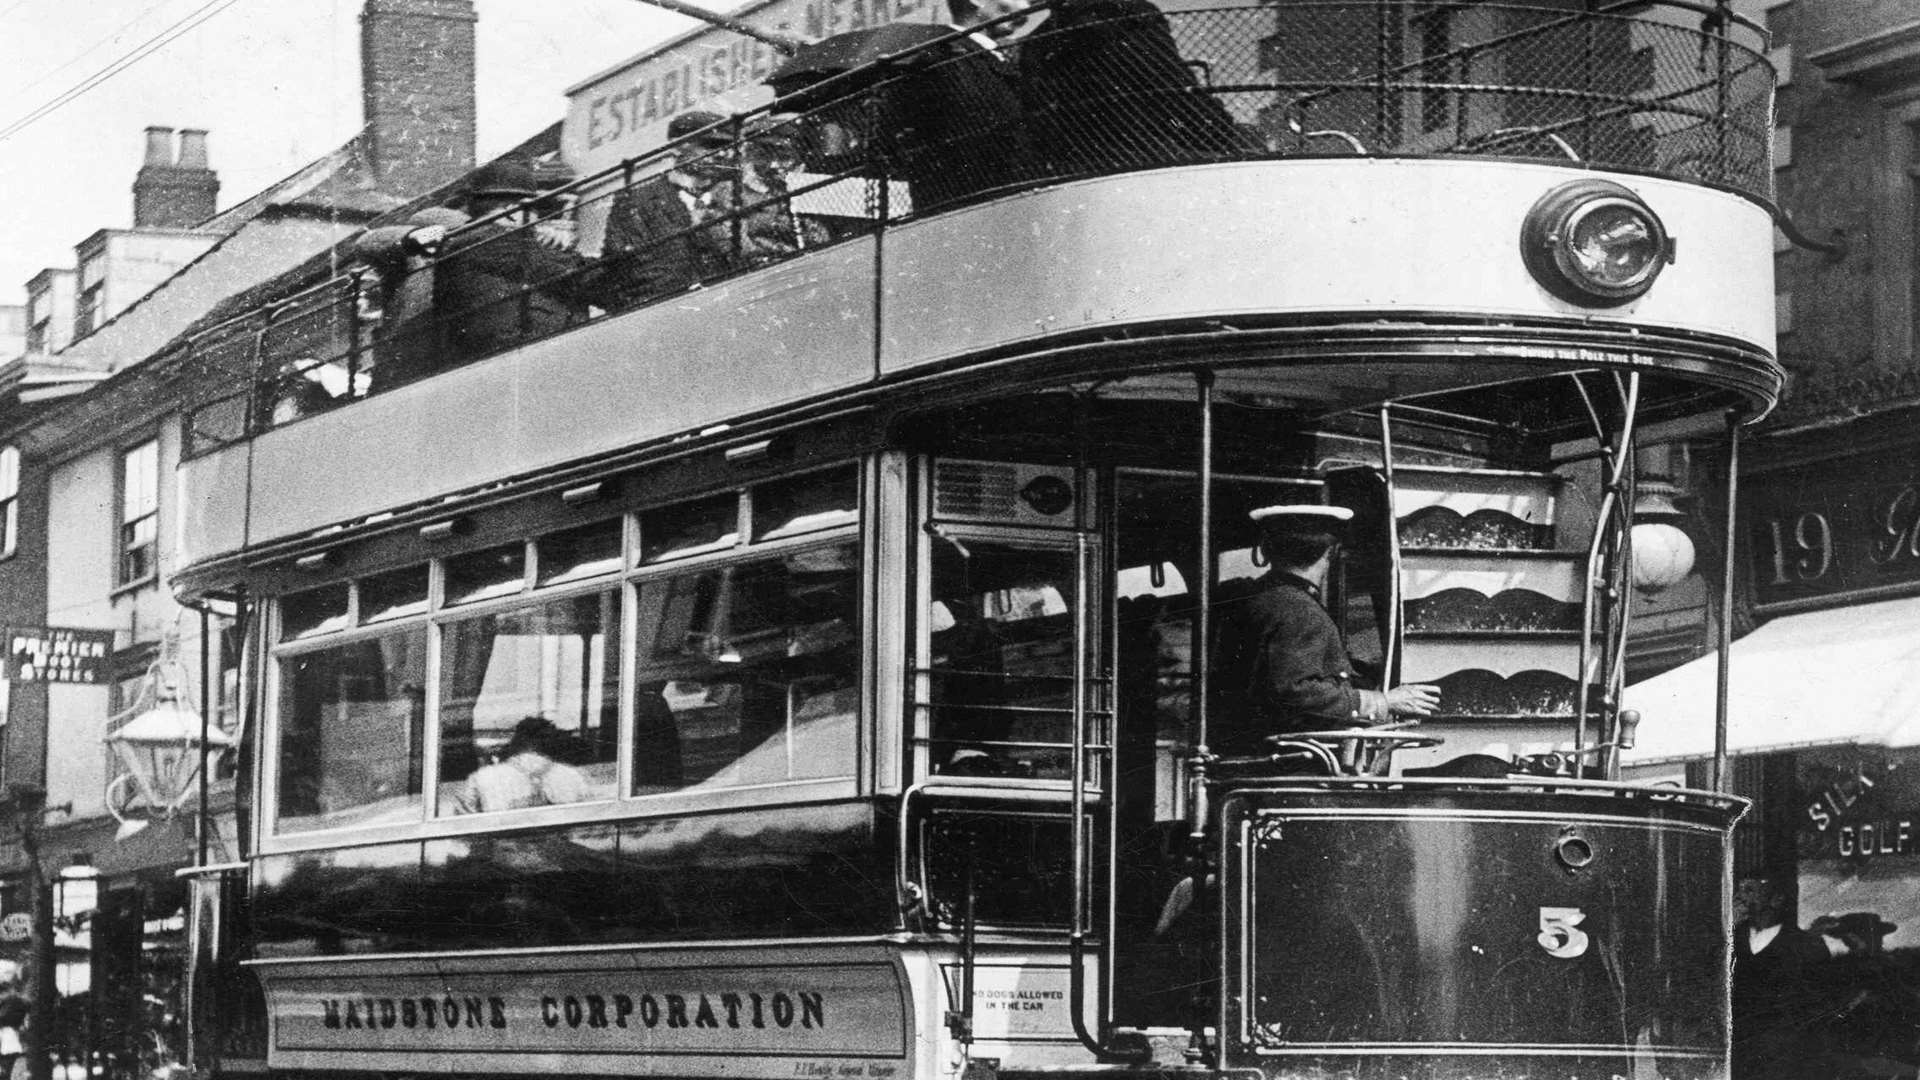 A Maidstone Corporation tram